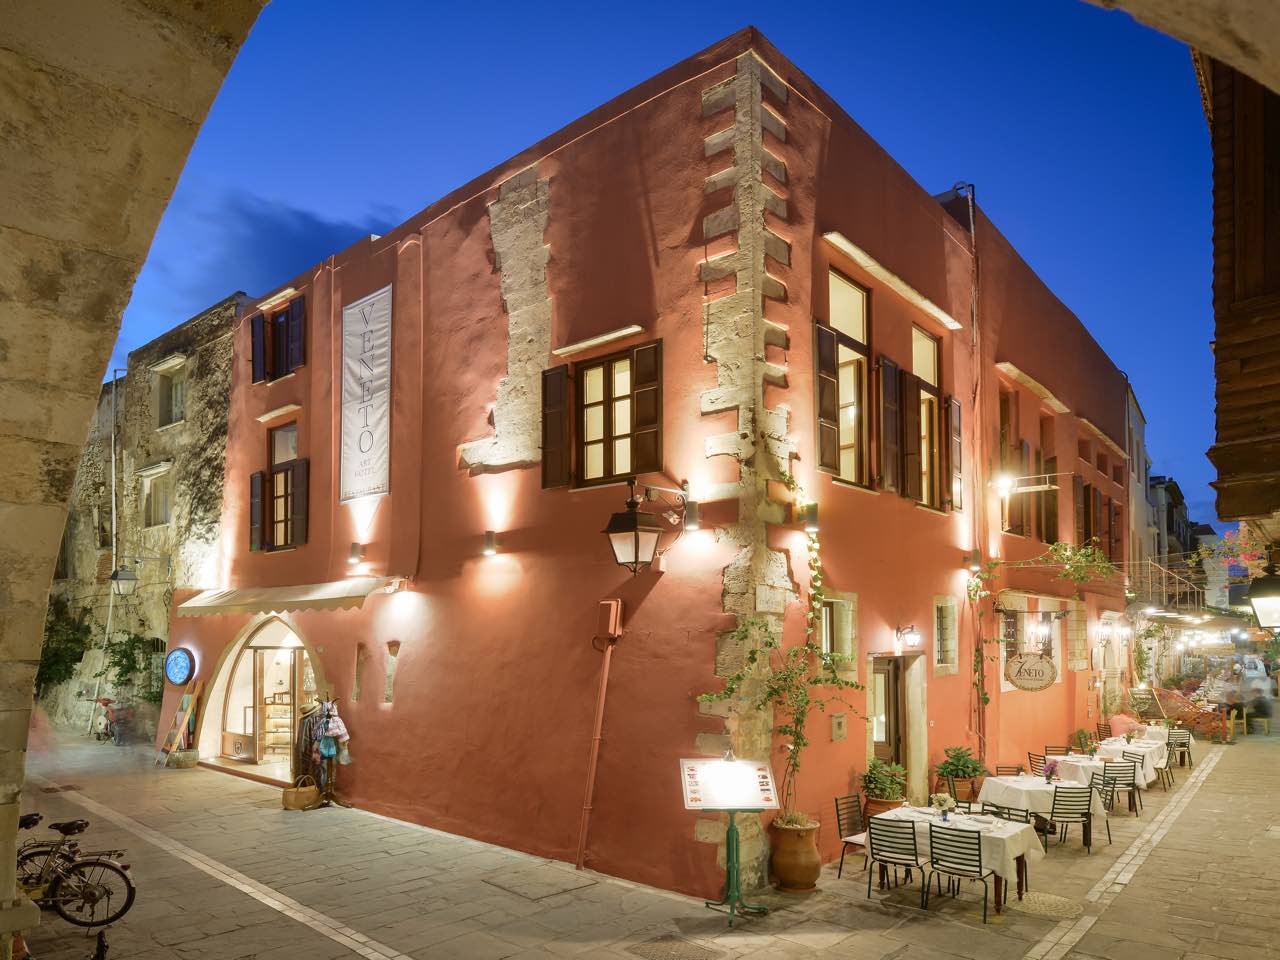 Veneto Suites Historic Hotel in Rethimno Crete